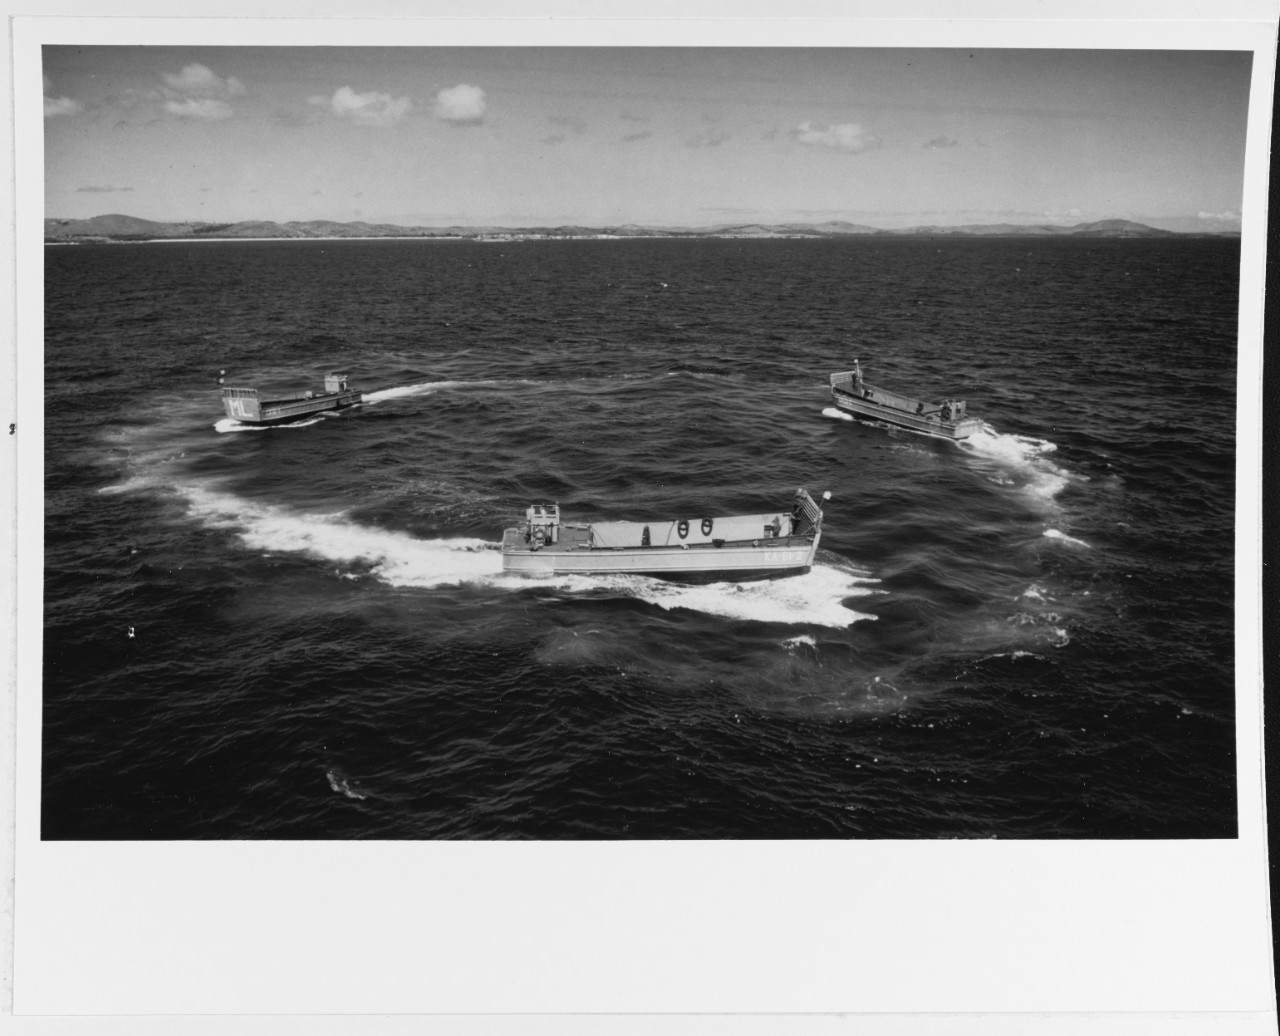 LCM-6 landing craft from USS MULIPHEN (AKA-61)